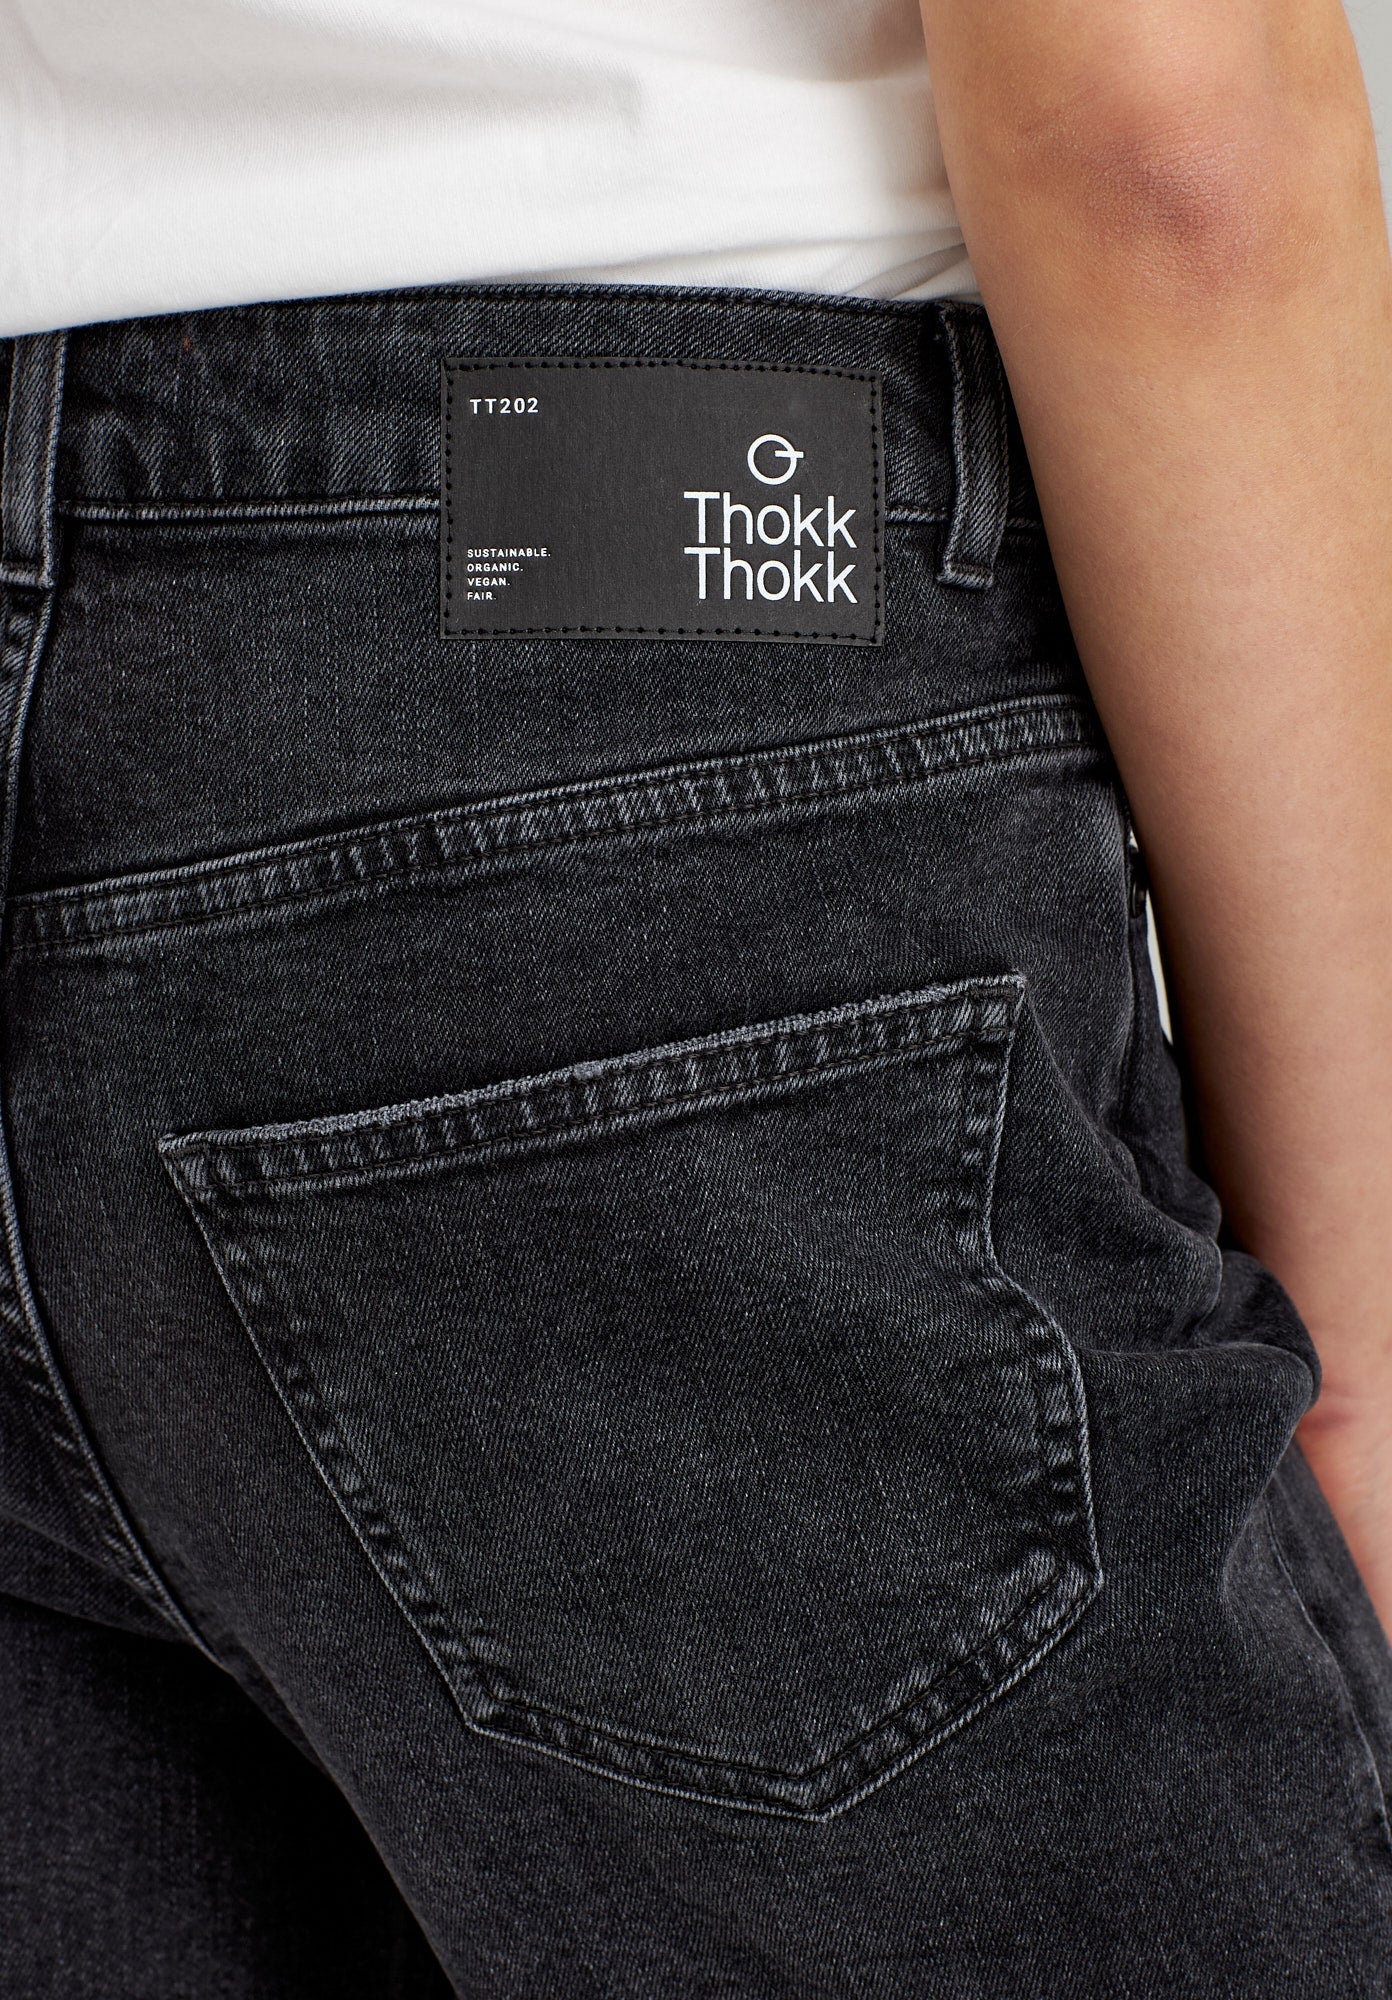 Blue trousers TT202 made of organic cotton from Thokkthokk